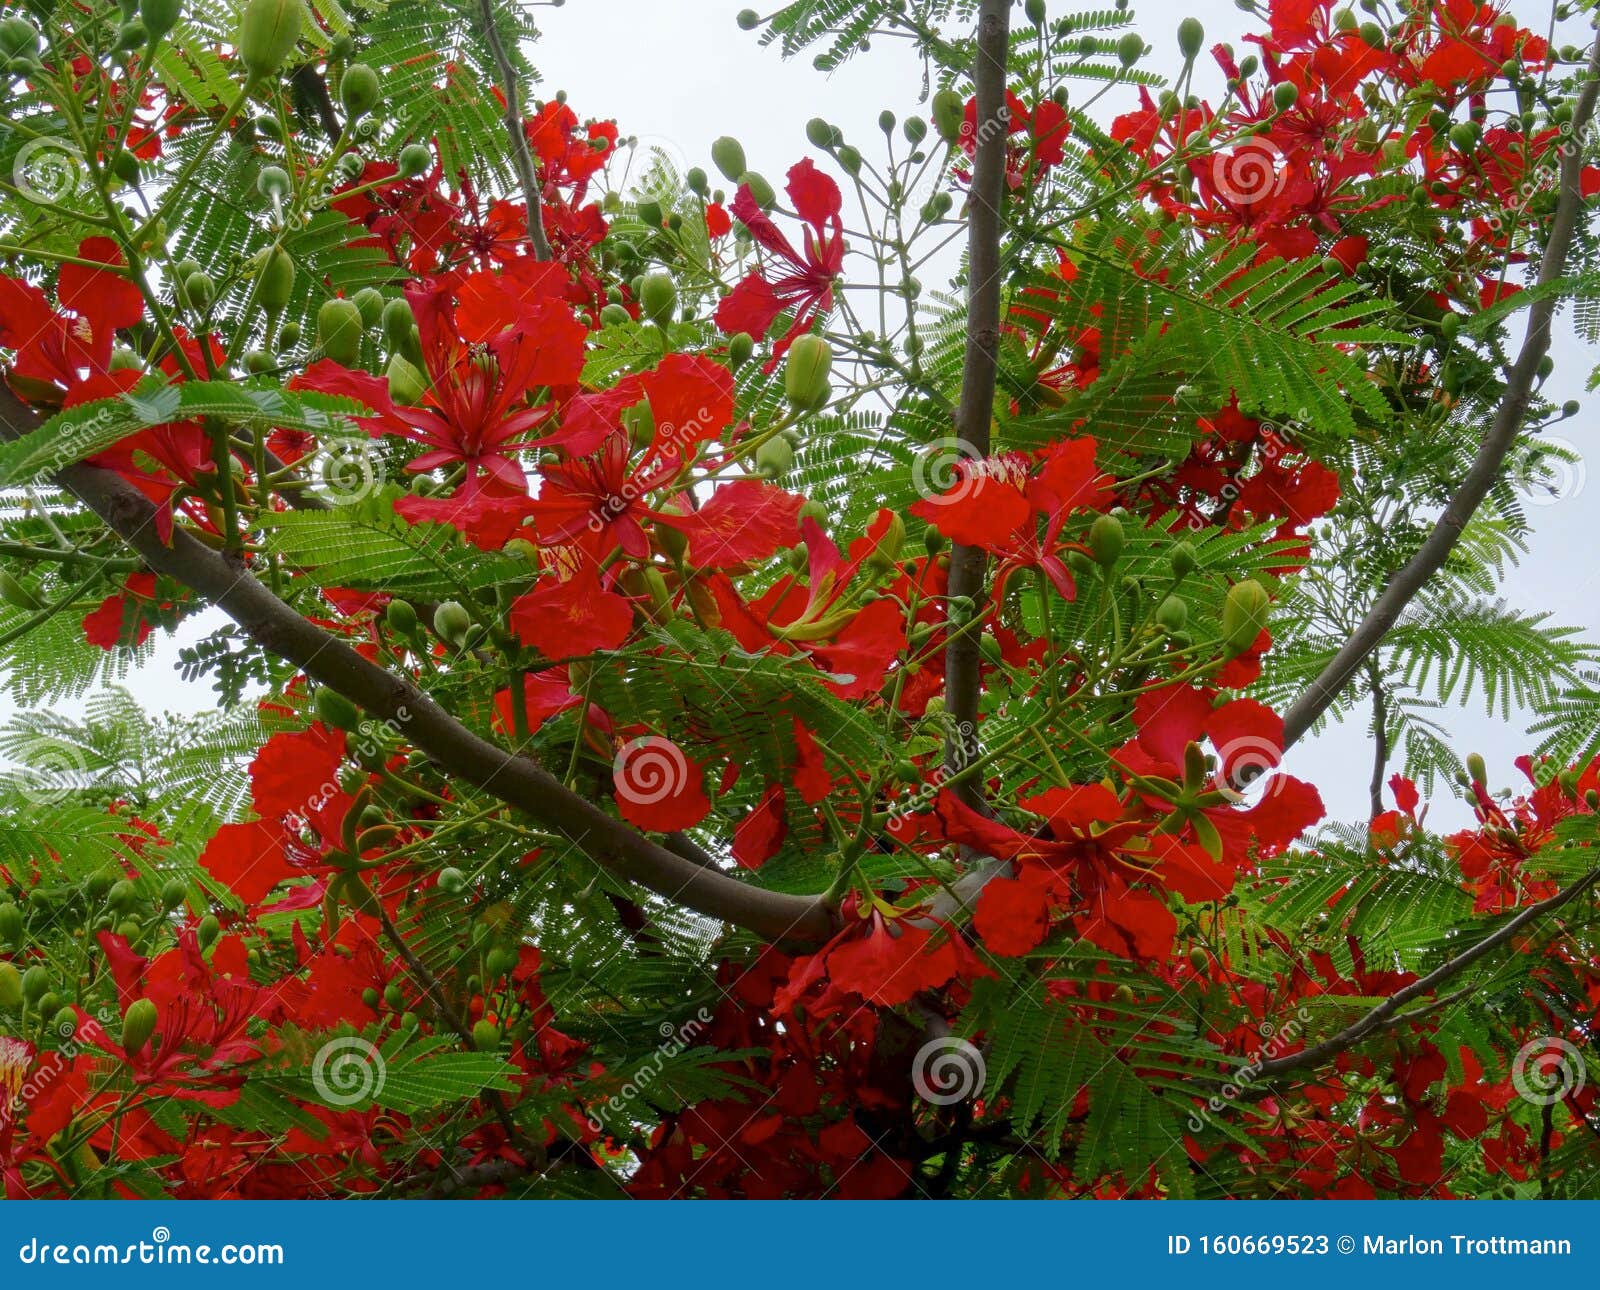 Blooming Royal Poinciana Tree Stock Image - Image of panoramic, delonix:  160669523